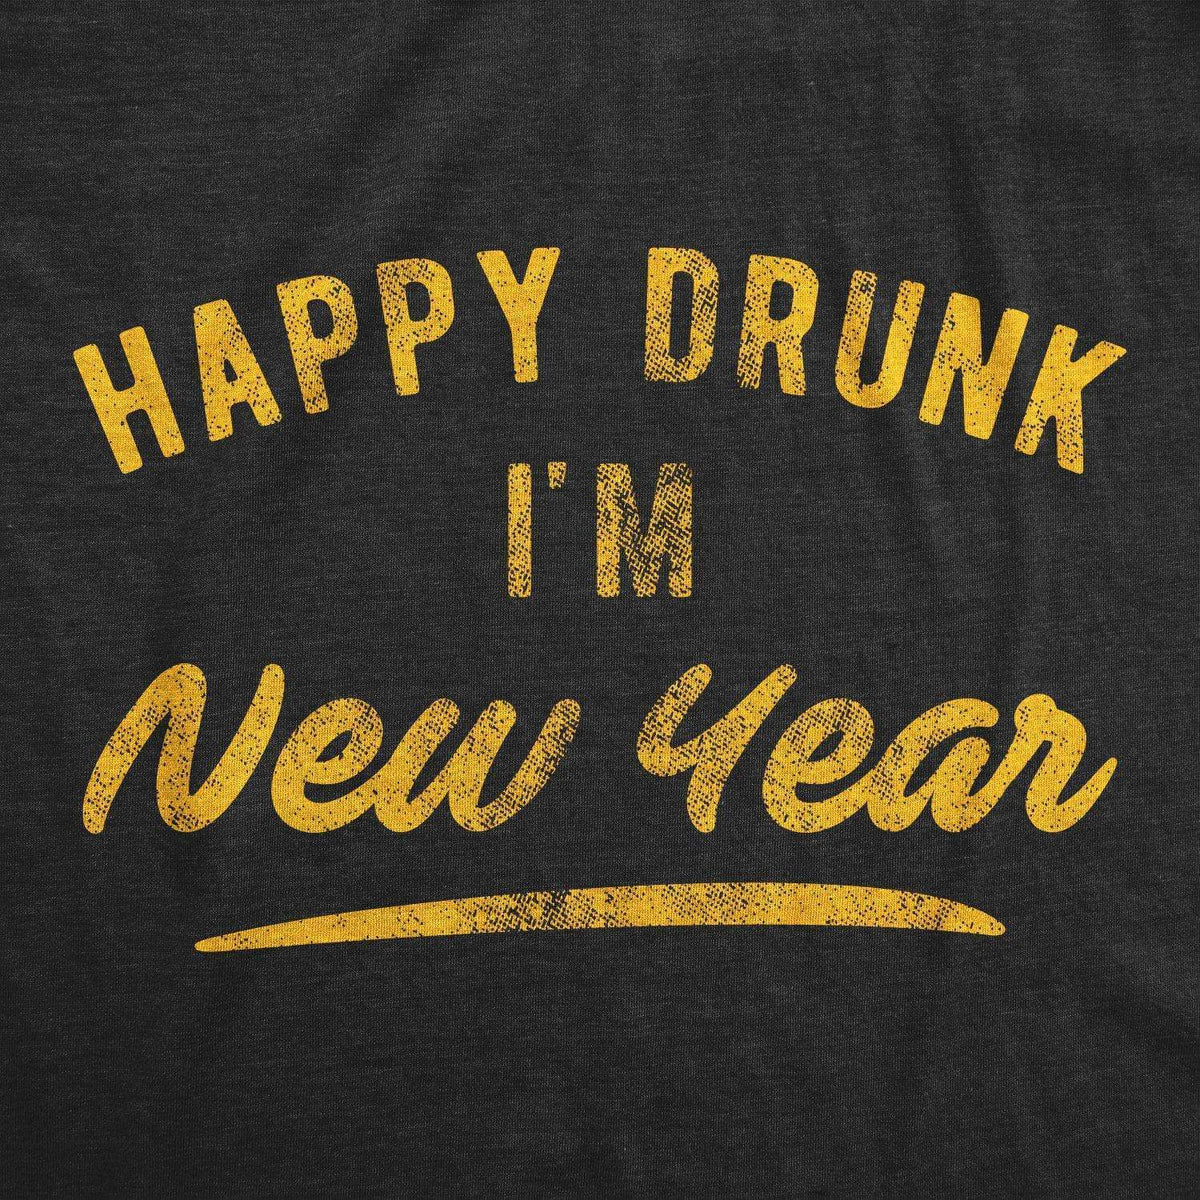 Happy Drunk I&#39;m New Year Men&#39;s Tshirt - Crazy Dog T-Shirts